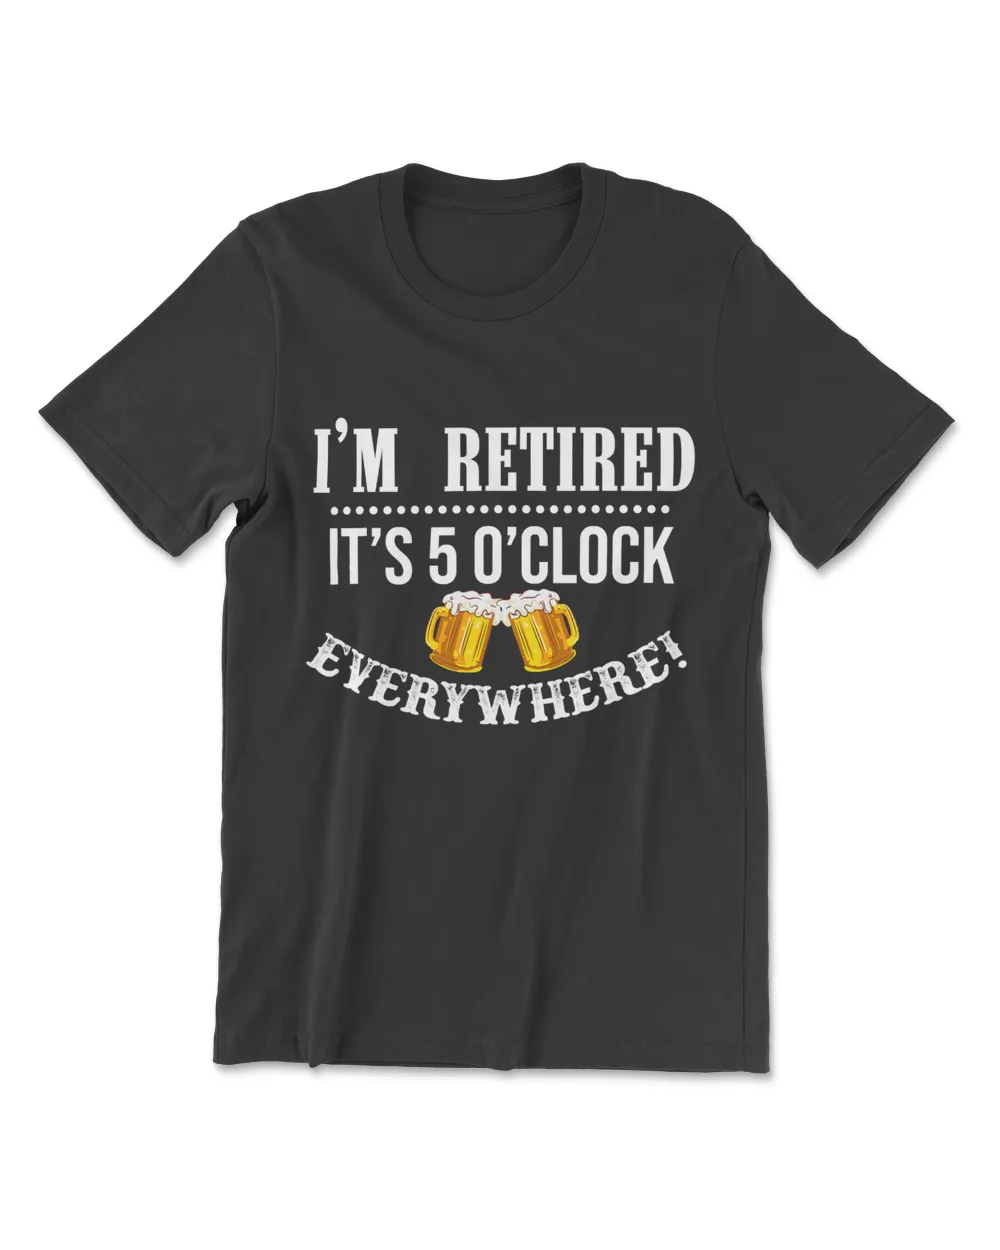 I'm Retired It's 5 O'clock Everywhere T-Shirt